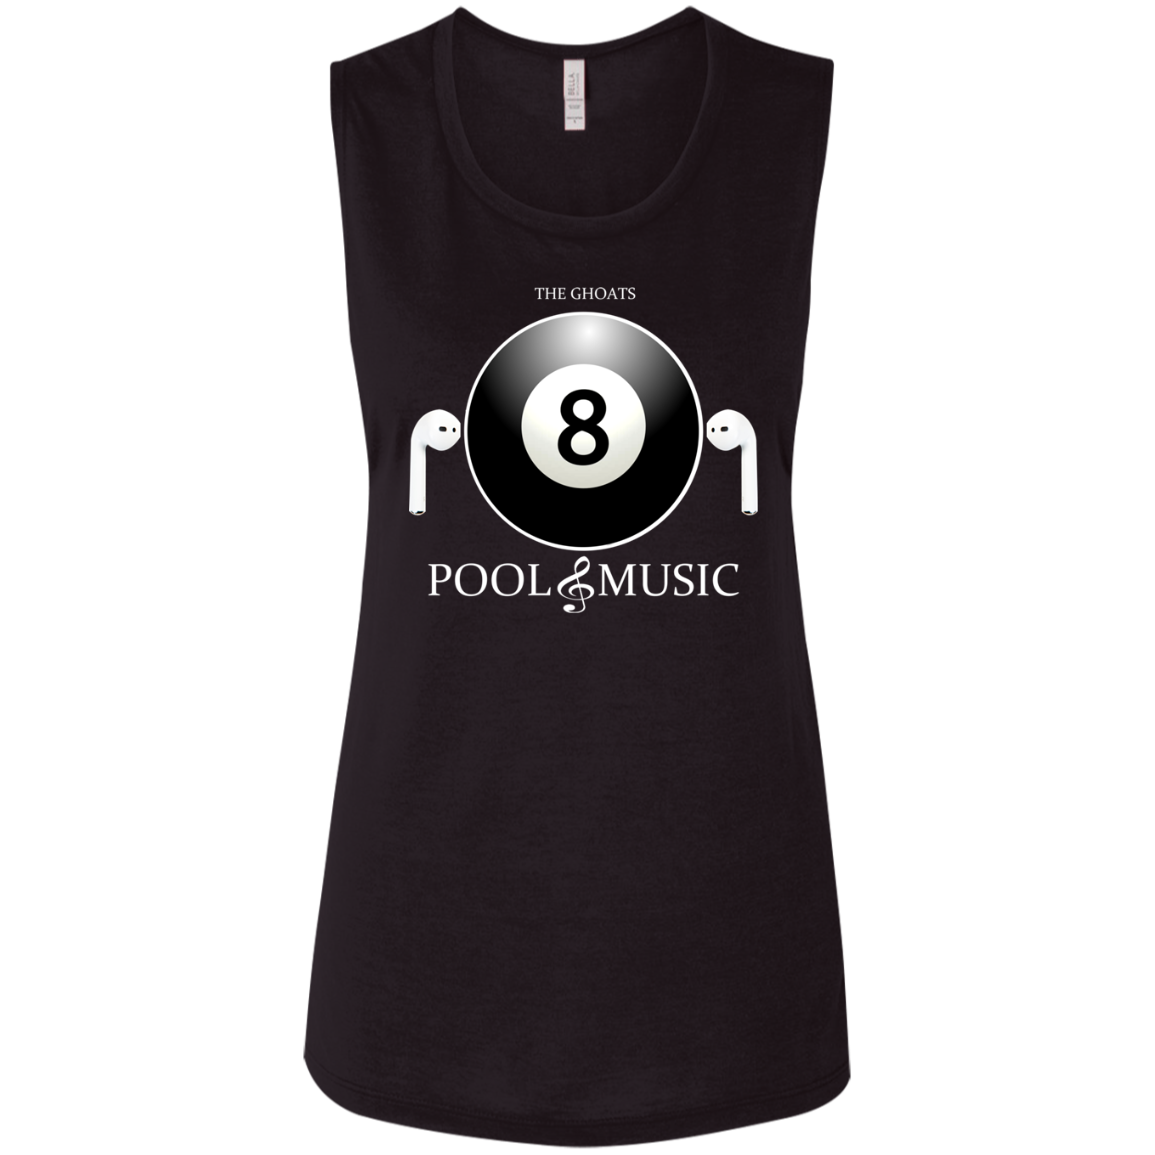 The GHOATS Custom Design. #19 Pool & Music. Ladies' Flowy Muscle Tank